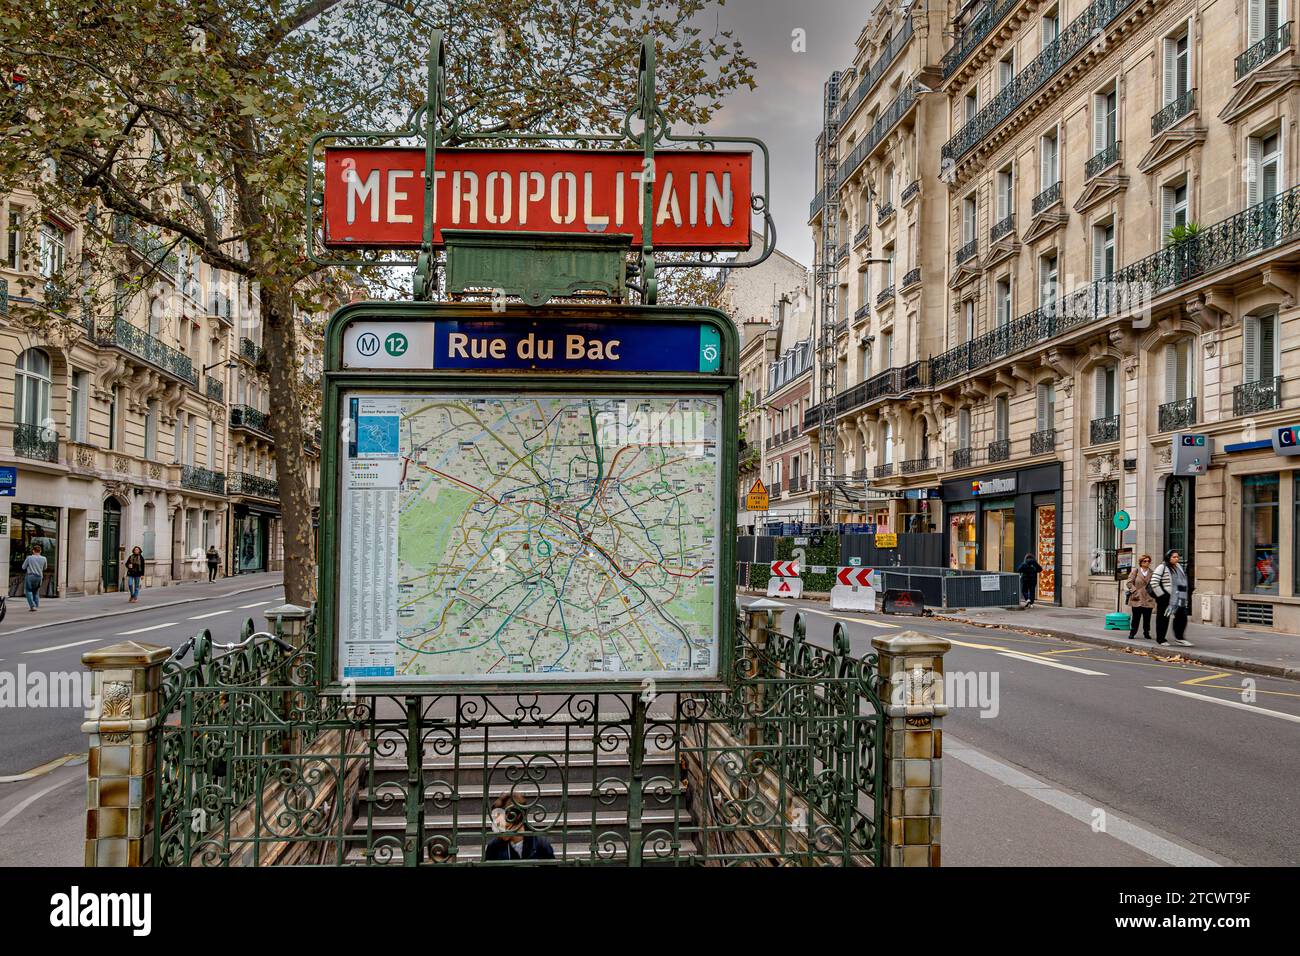 L'ingresso alla stazione della metropolitana di Ru Du Bac su Boulevard Raspail nel 7° arrondissement di Parigi, Francia Foto Stock